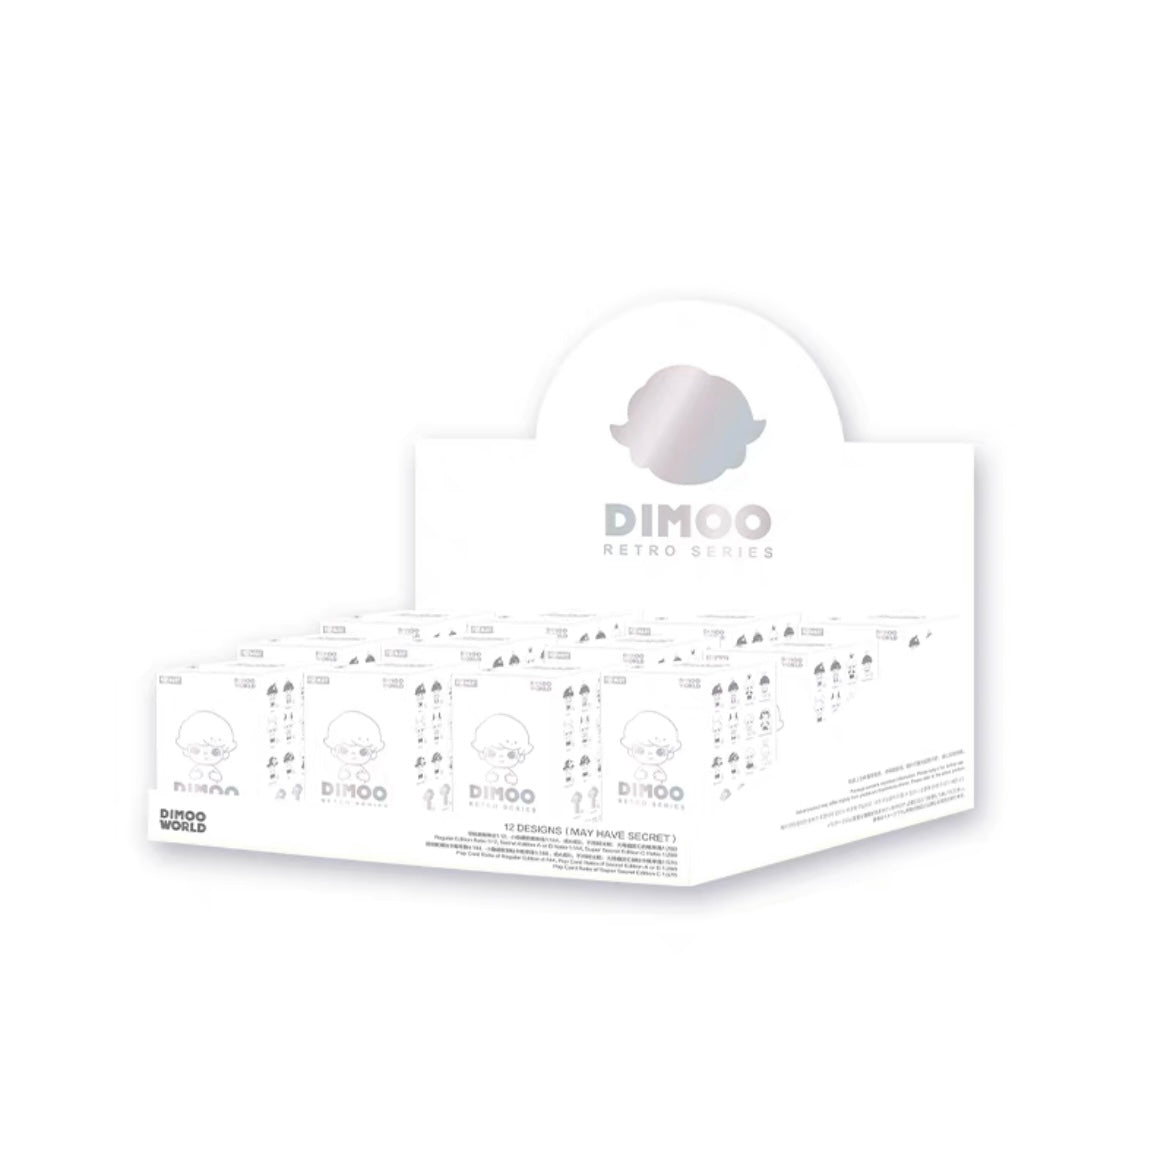 Dimoo Retro Series Blind Box